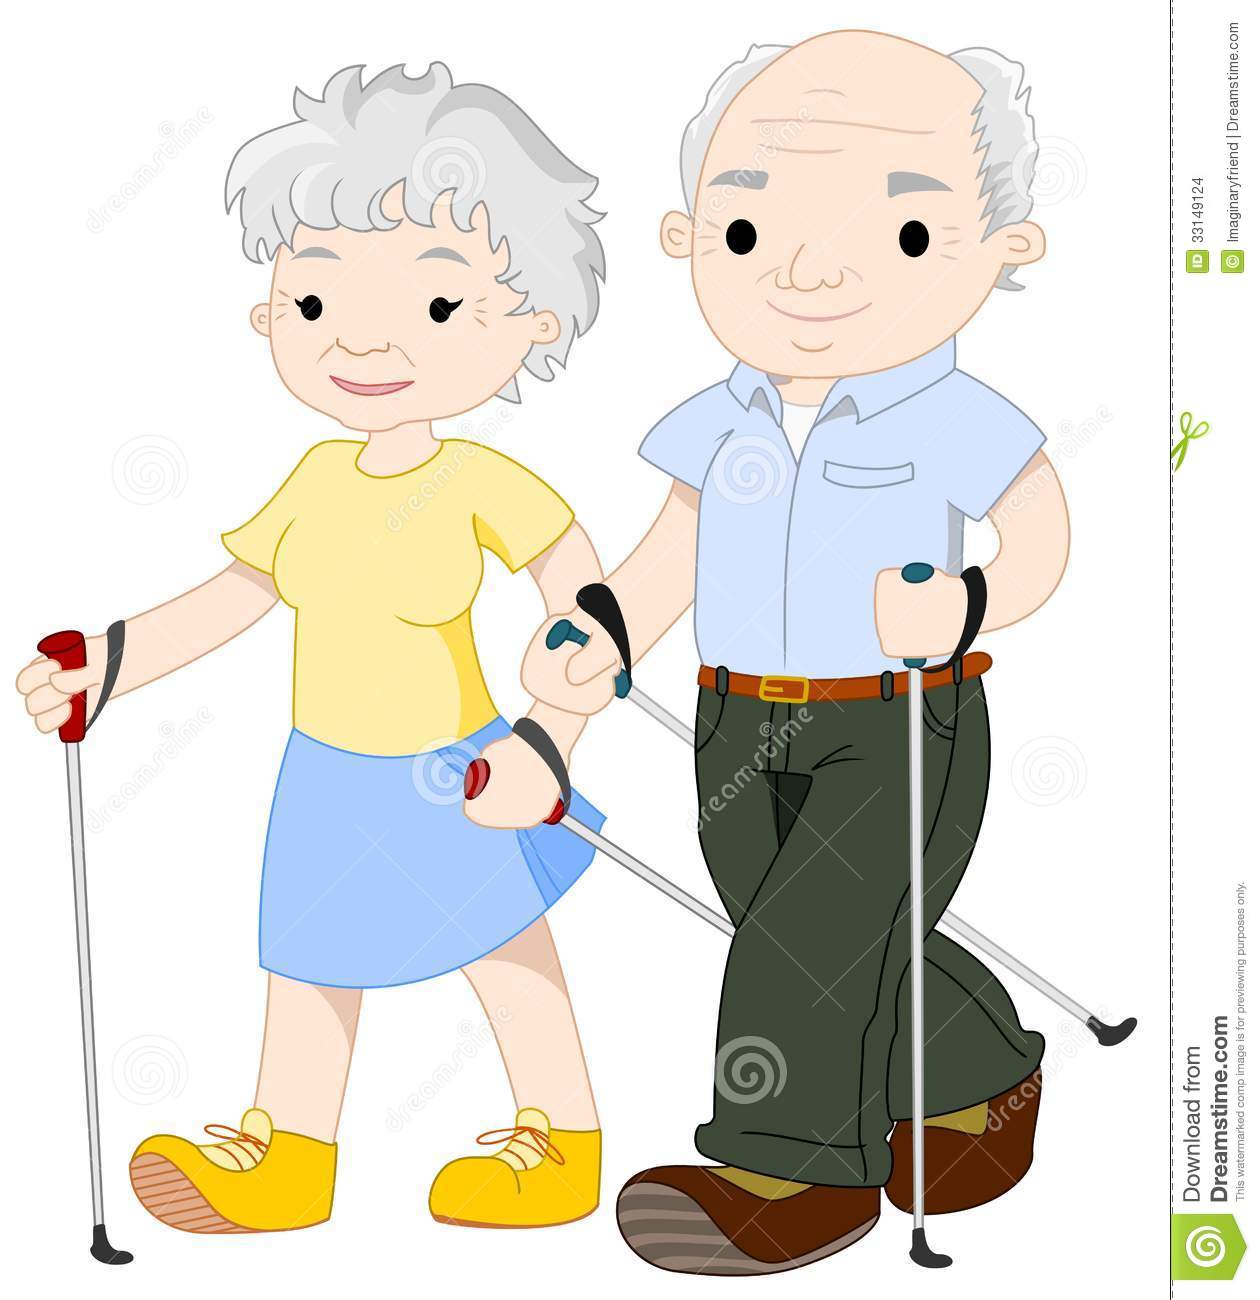 Two Elderly People Nordic Walking Stock Images   Image  33149124